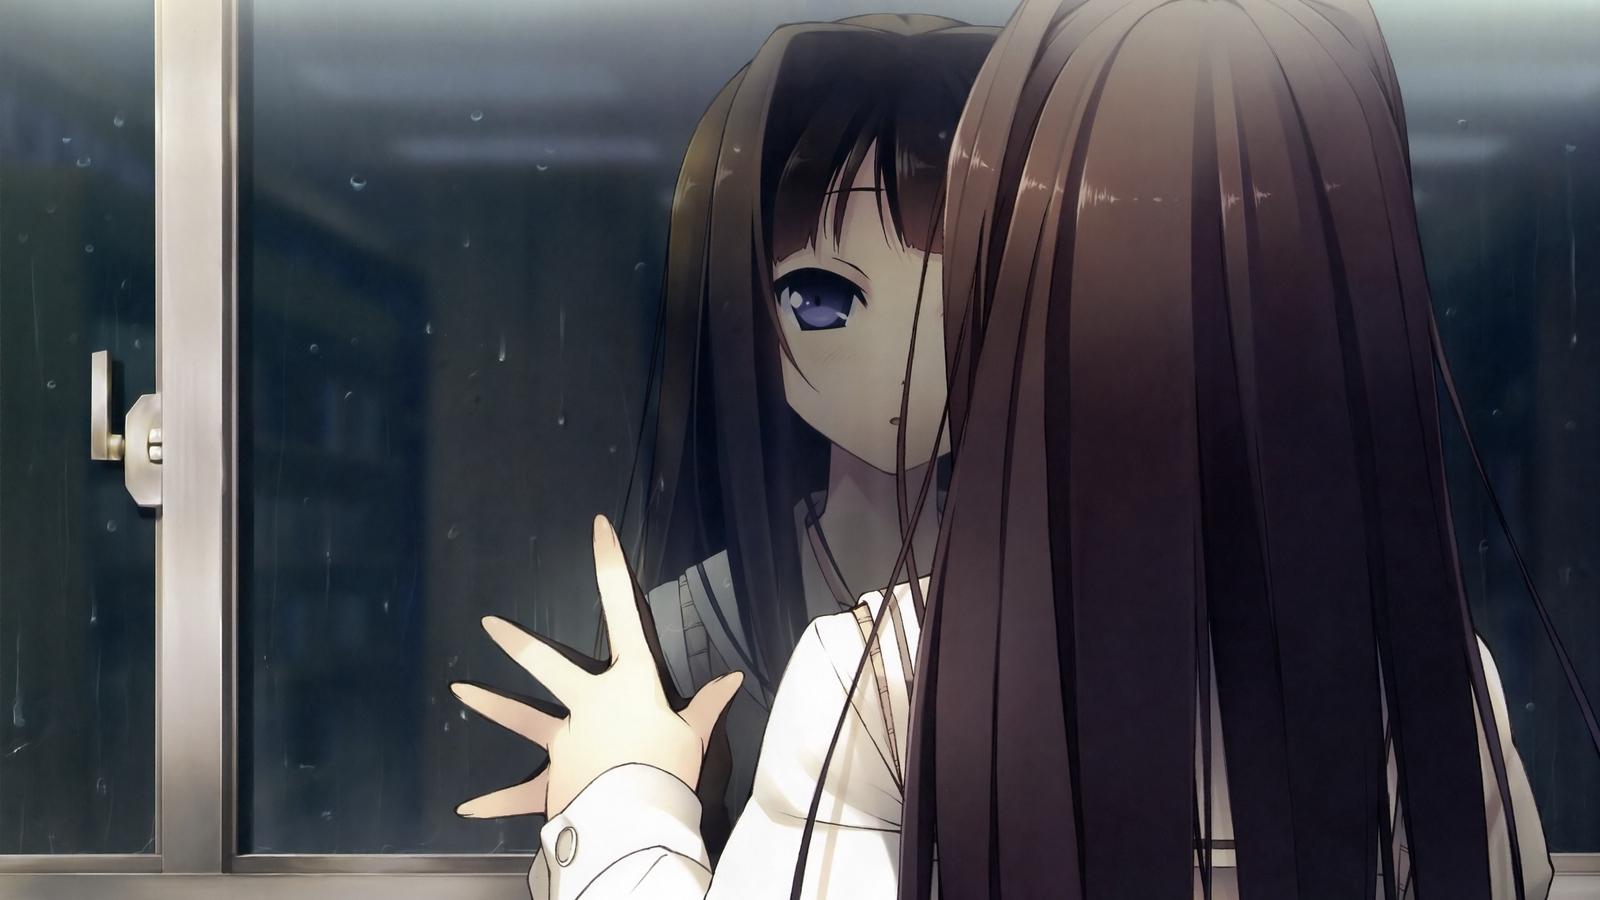 Download wallpaper 1600x900 anime girl, window, reflection, drop